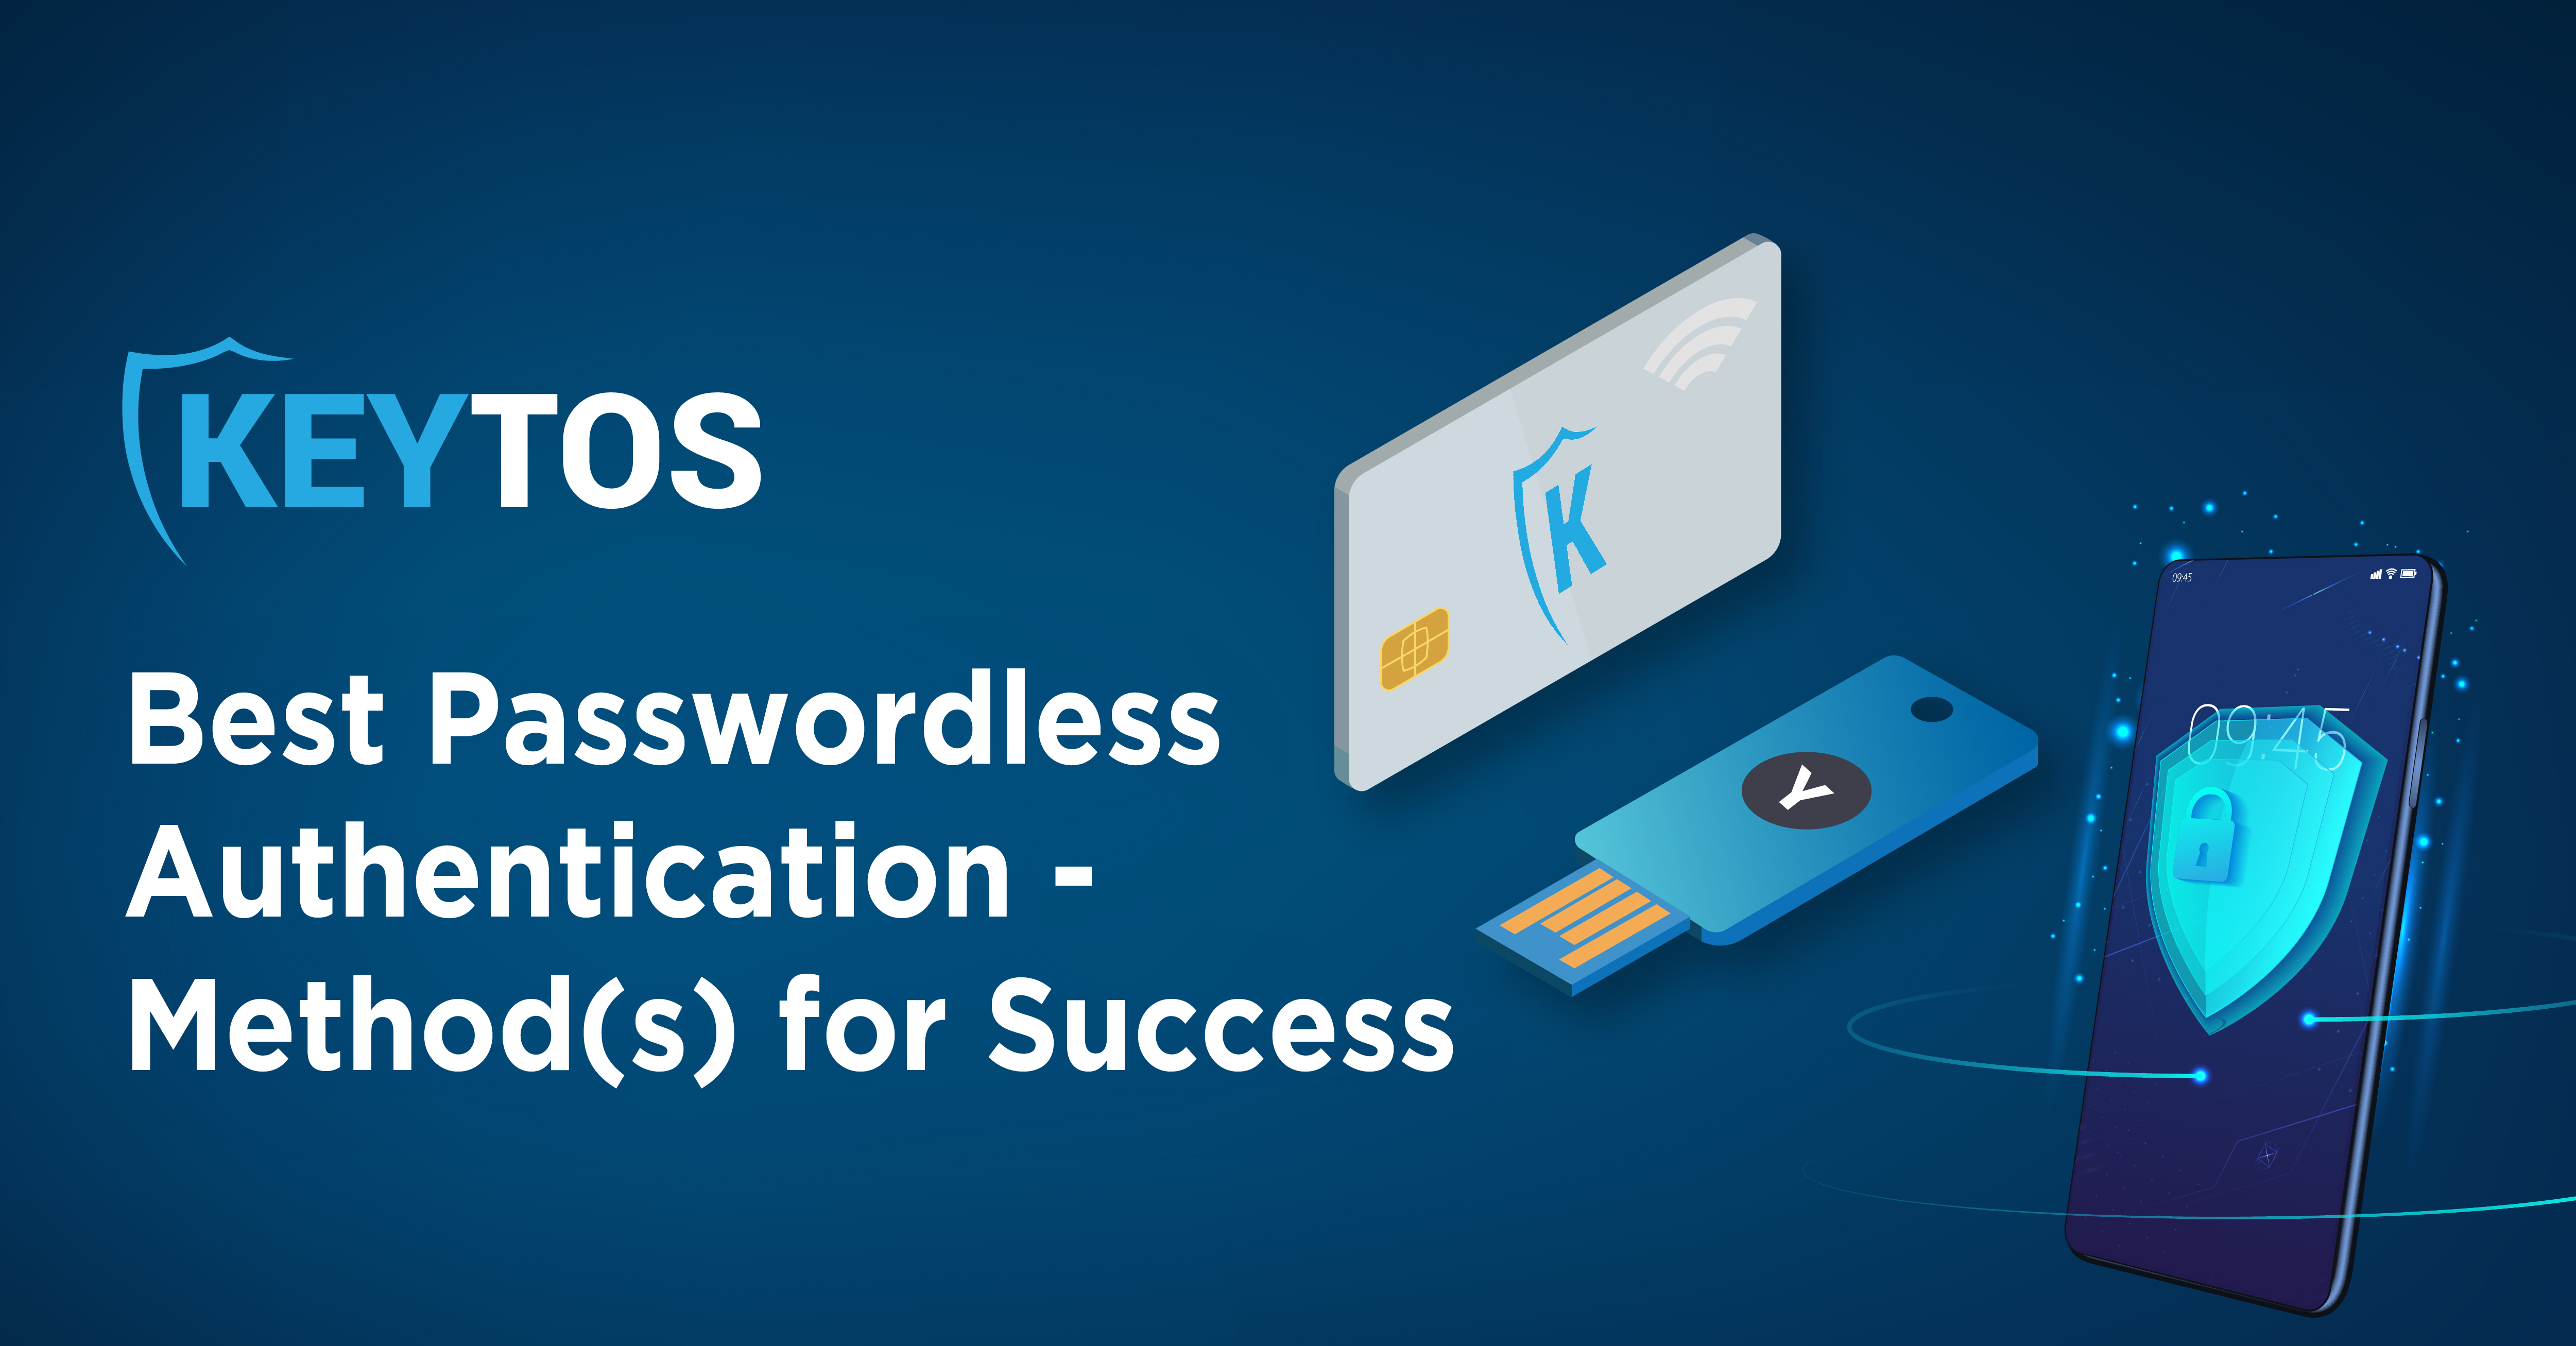 The Best Passwordless Authentication Methods